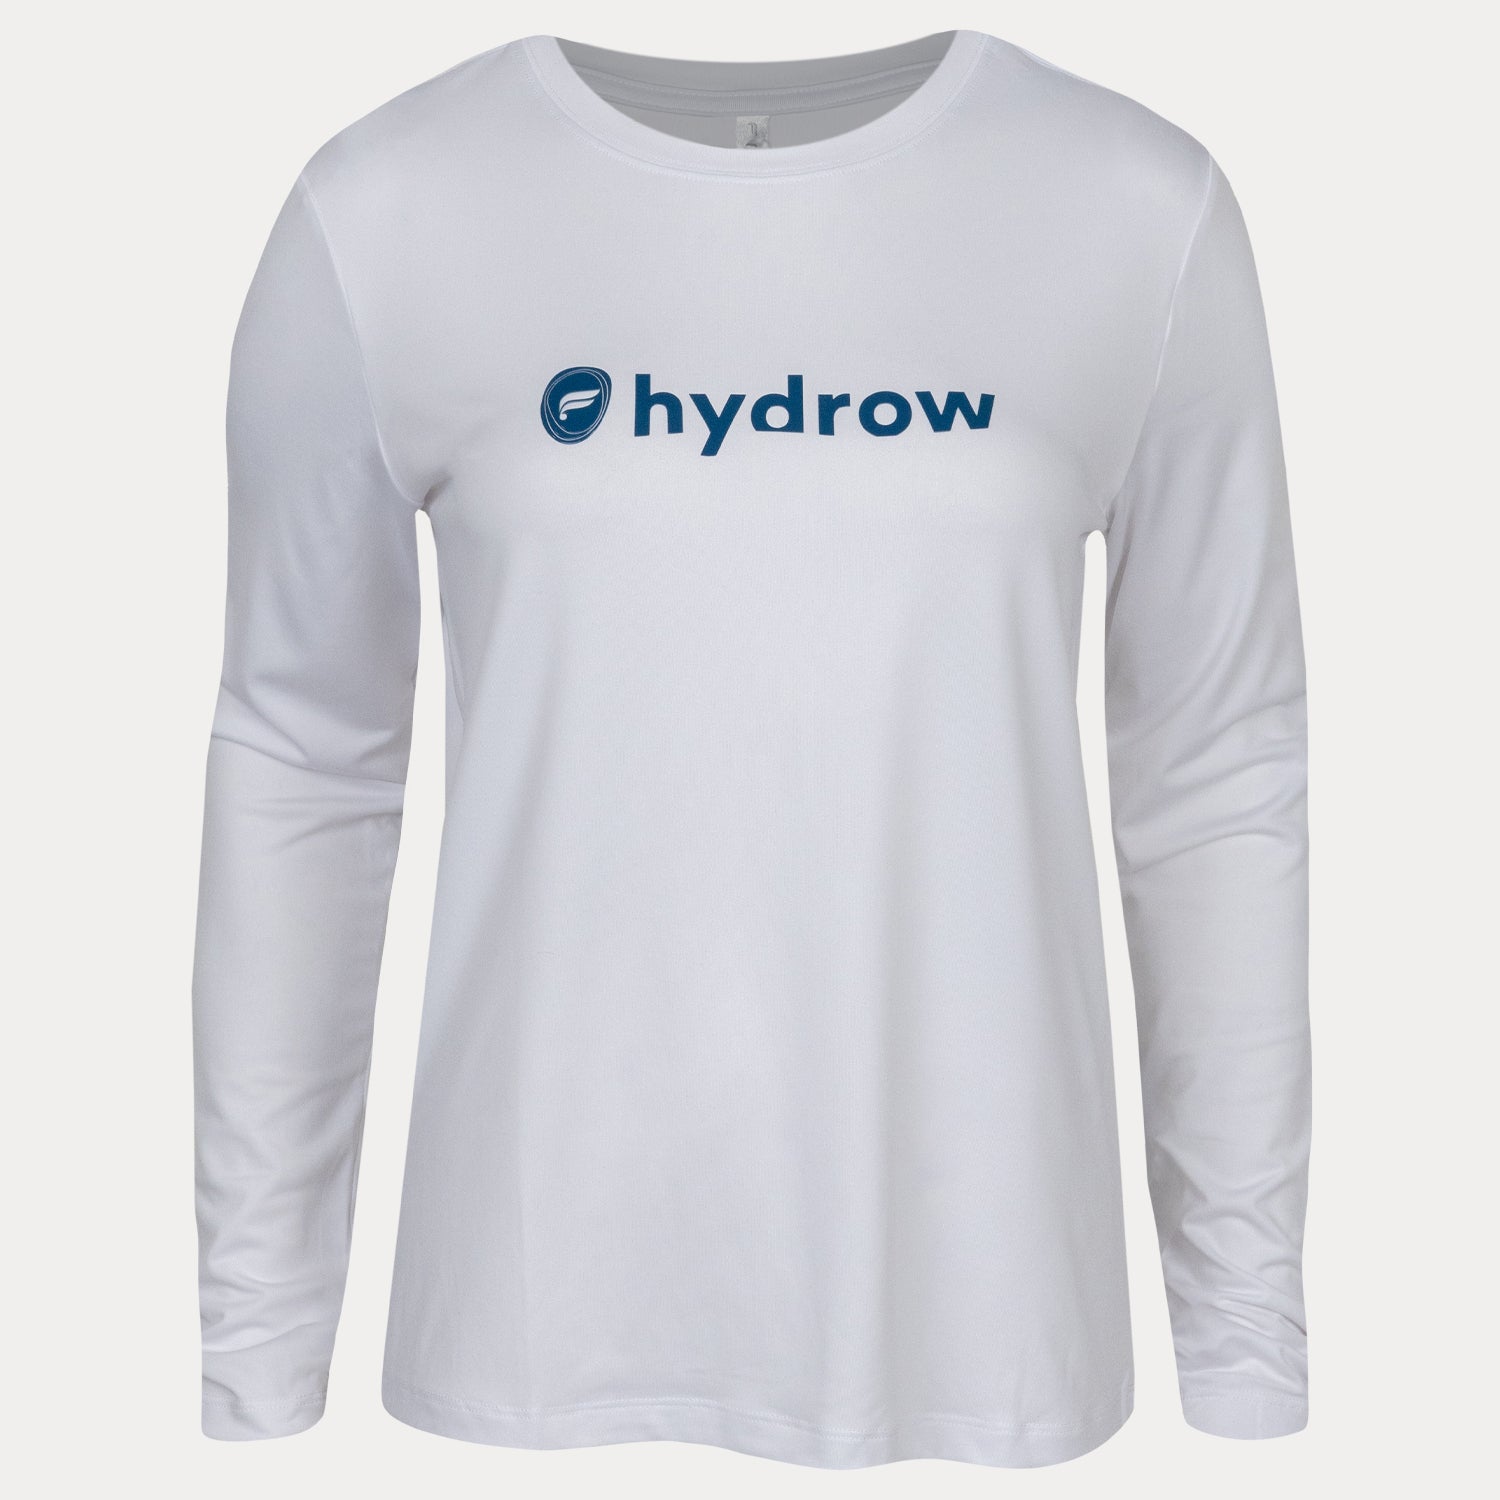 Hydrow Rowing Club T-Shirt - Hydrow Apparel Store